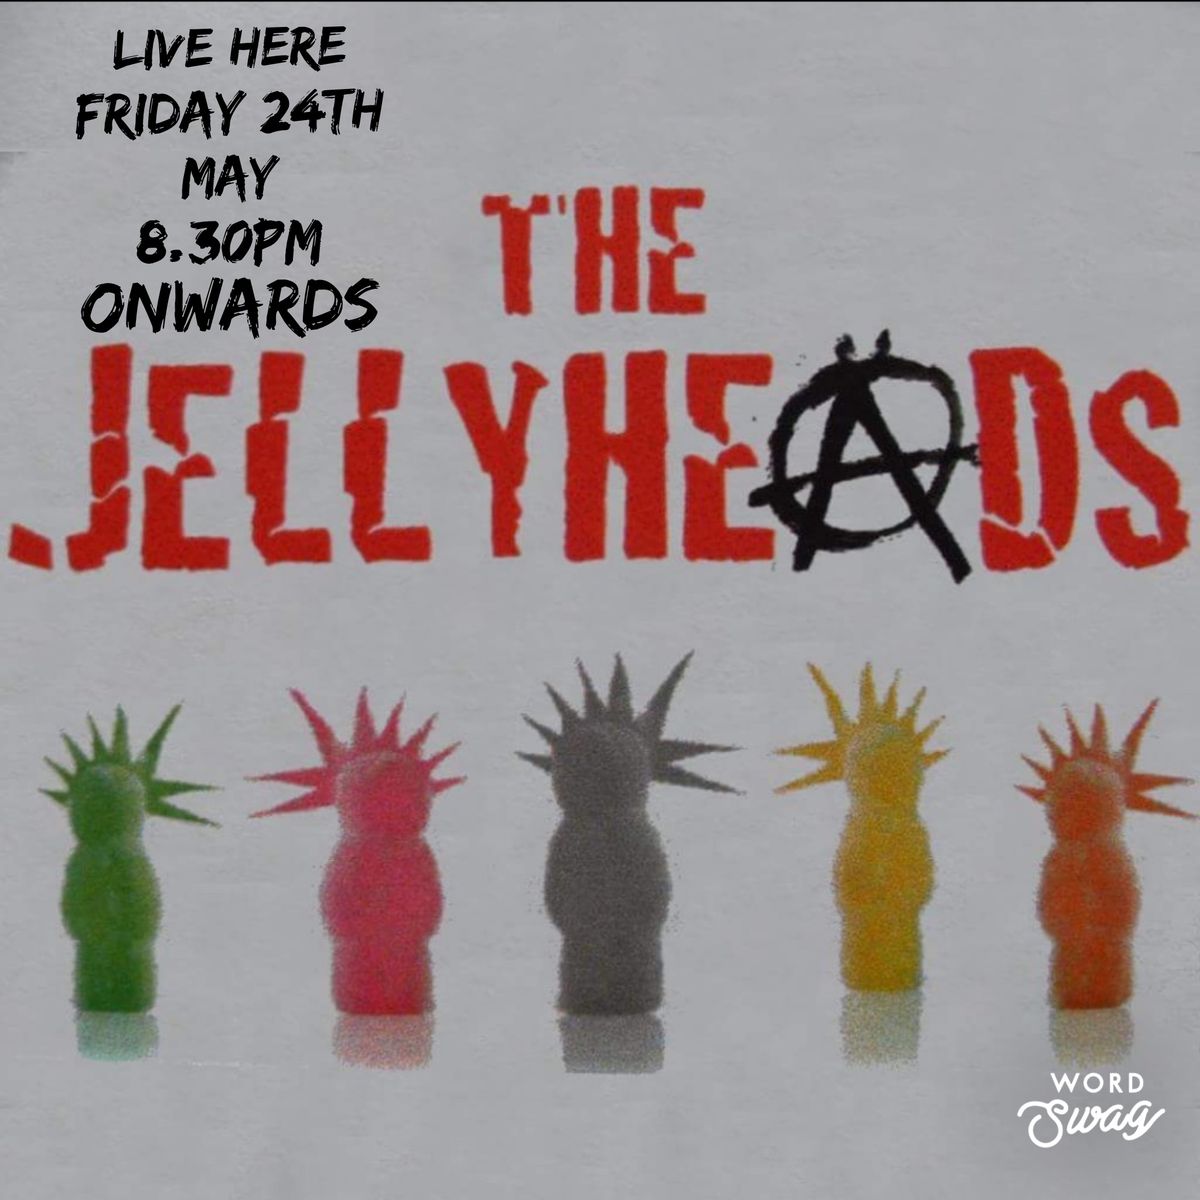 The Jellyheads